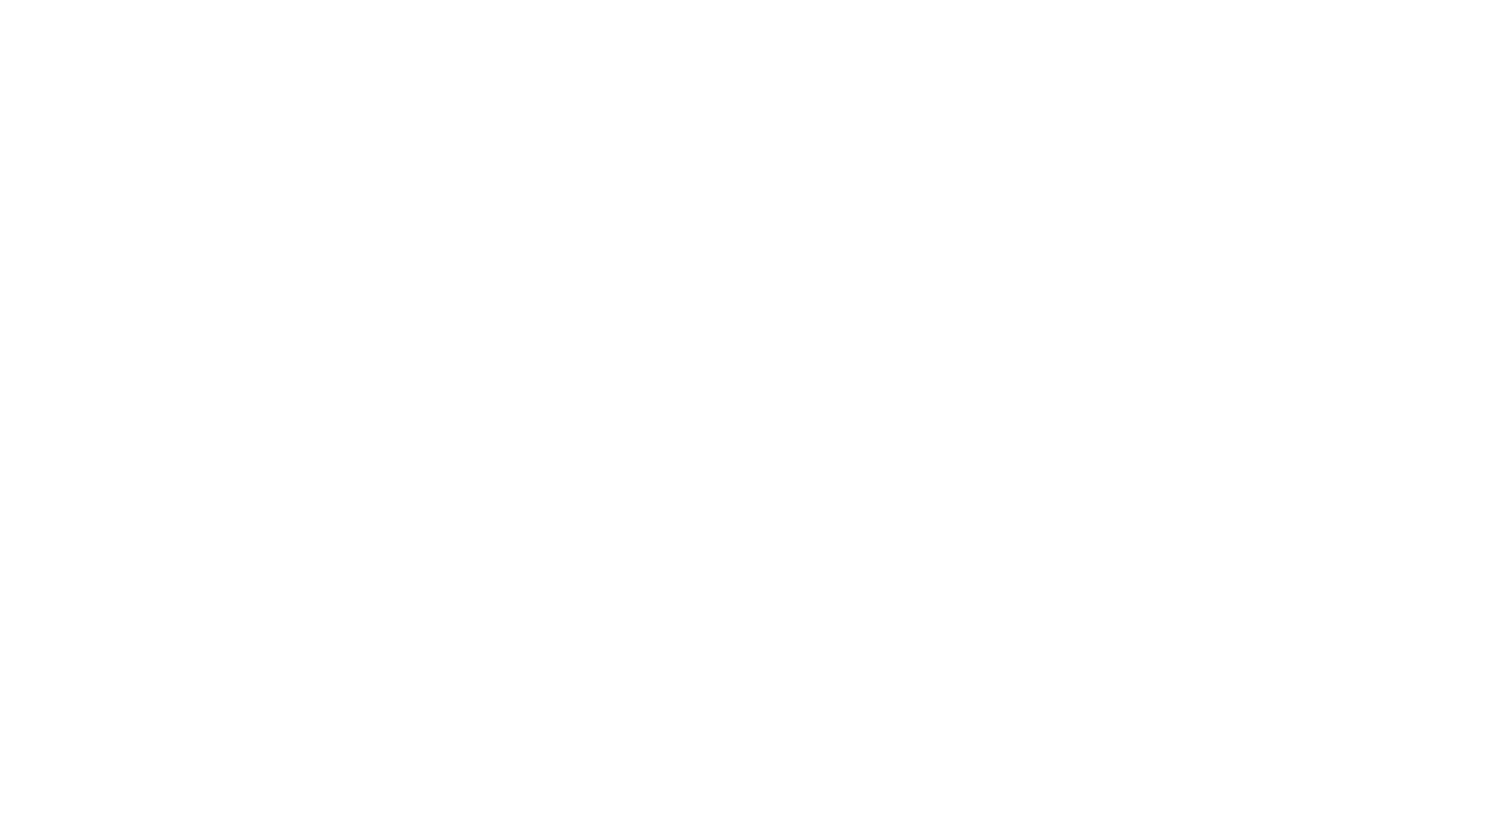 Briana Fernandez Music